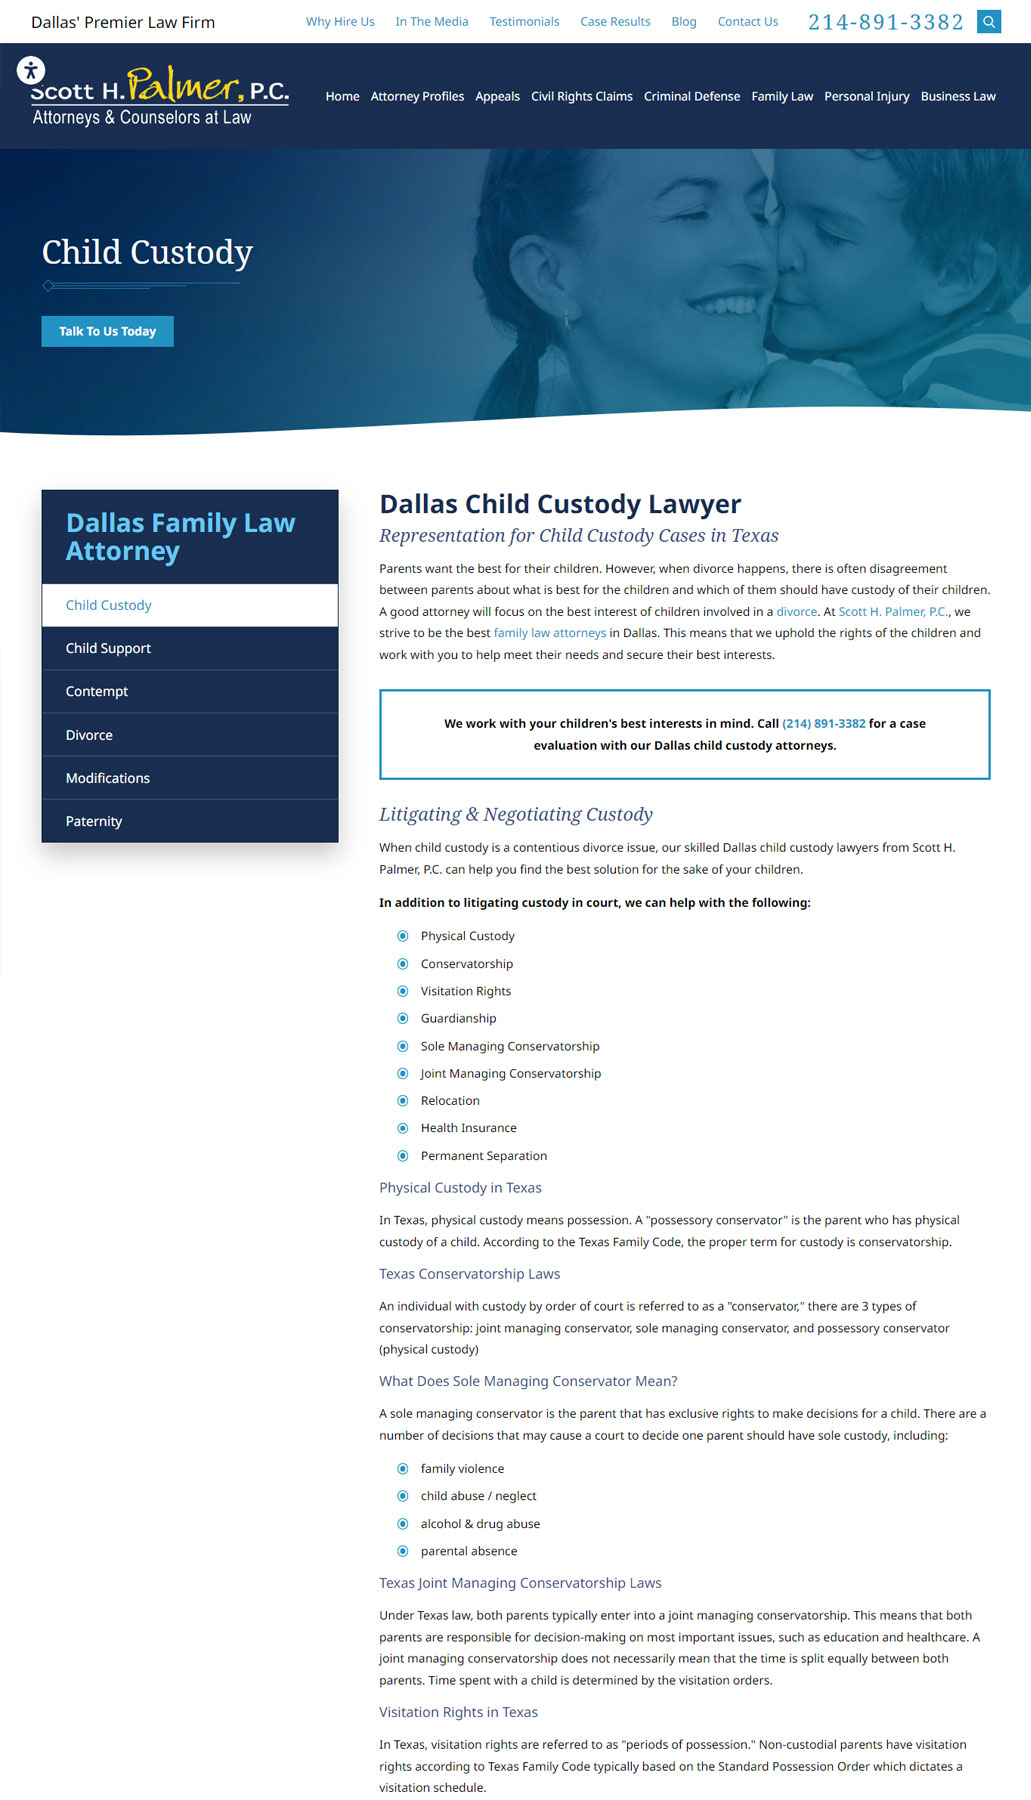 Child Custody Lawyers' Website Design